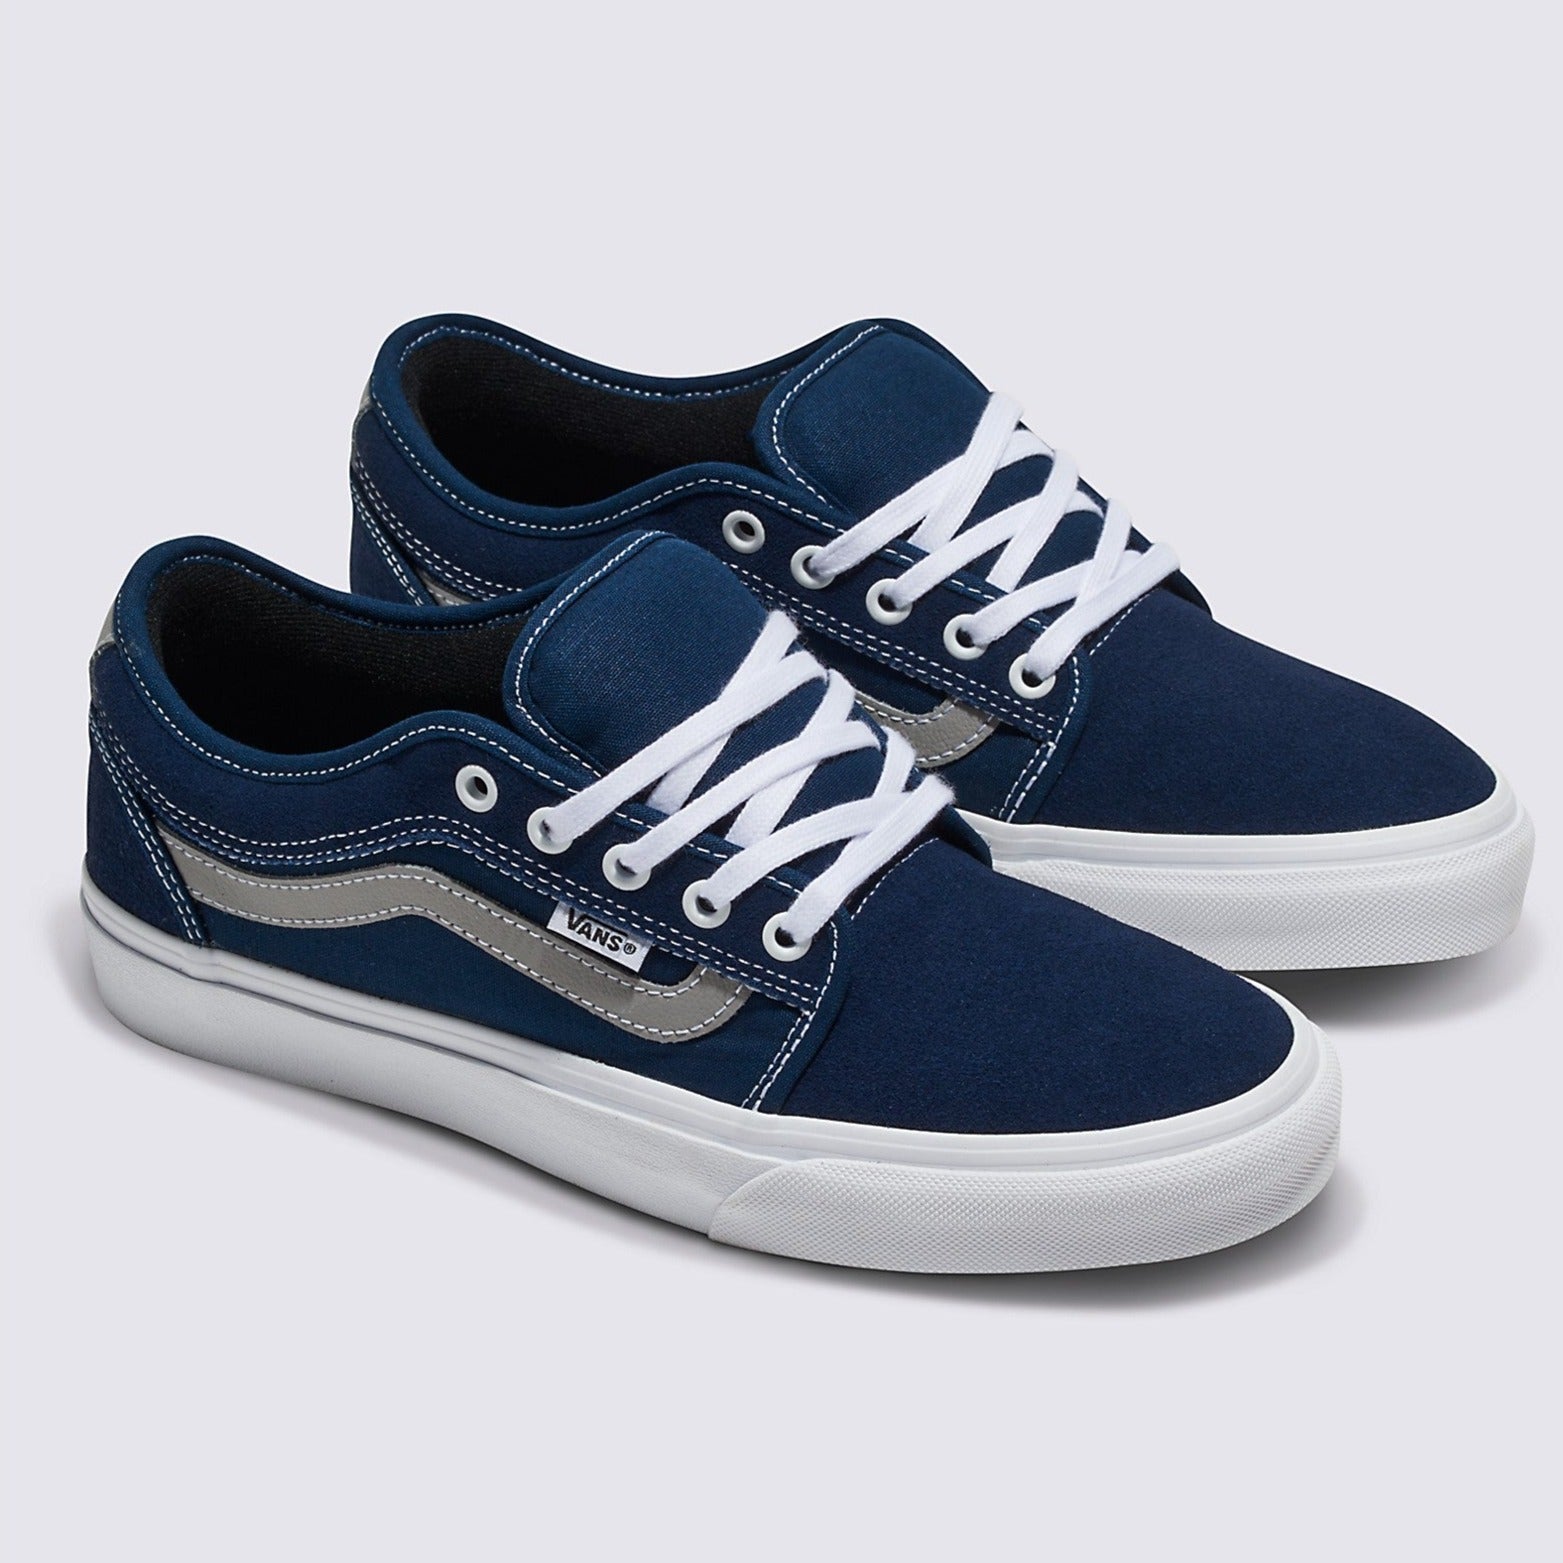 Navy/Grey Chukka Low Sidestripe Vans Skate Shoe